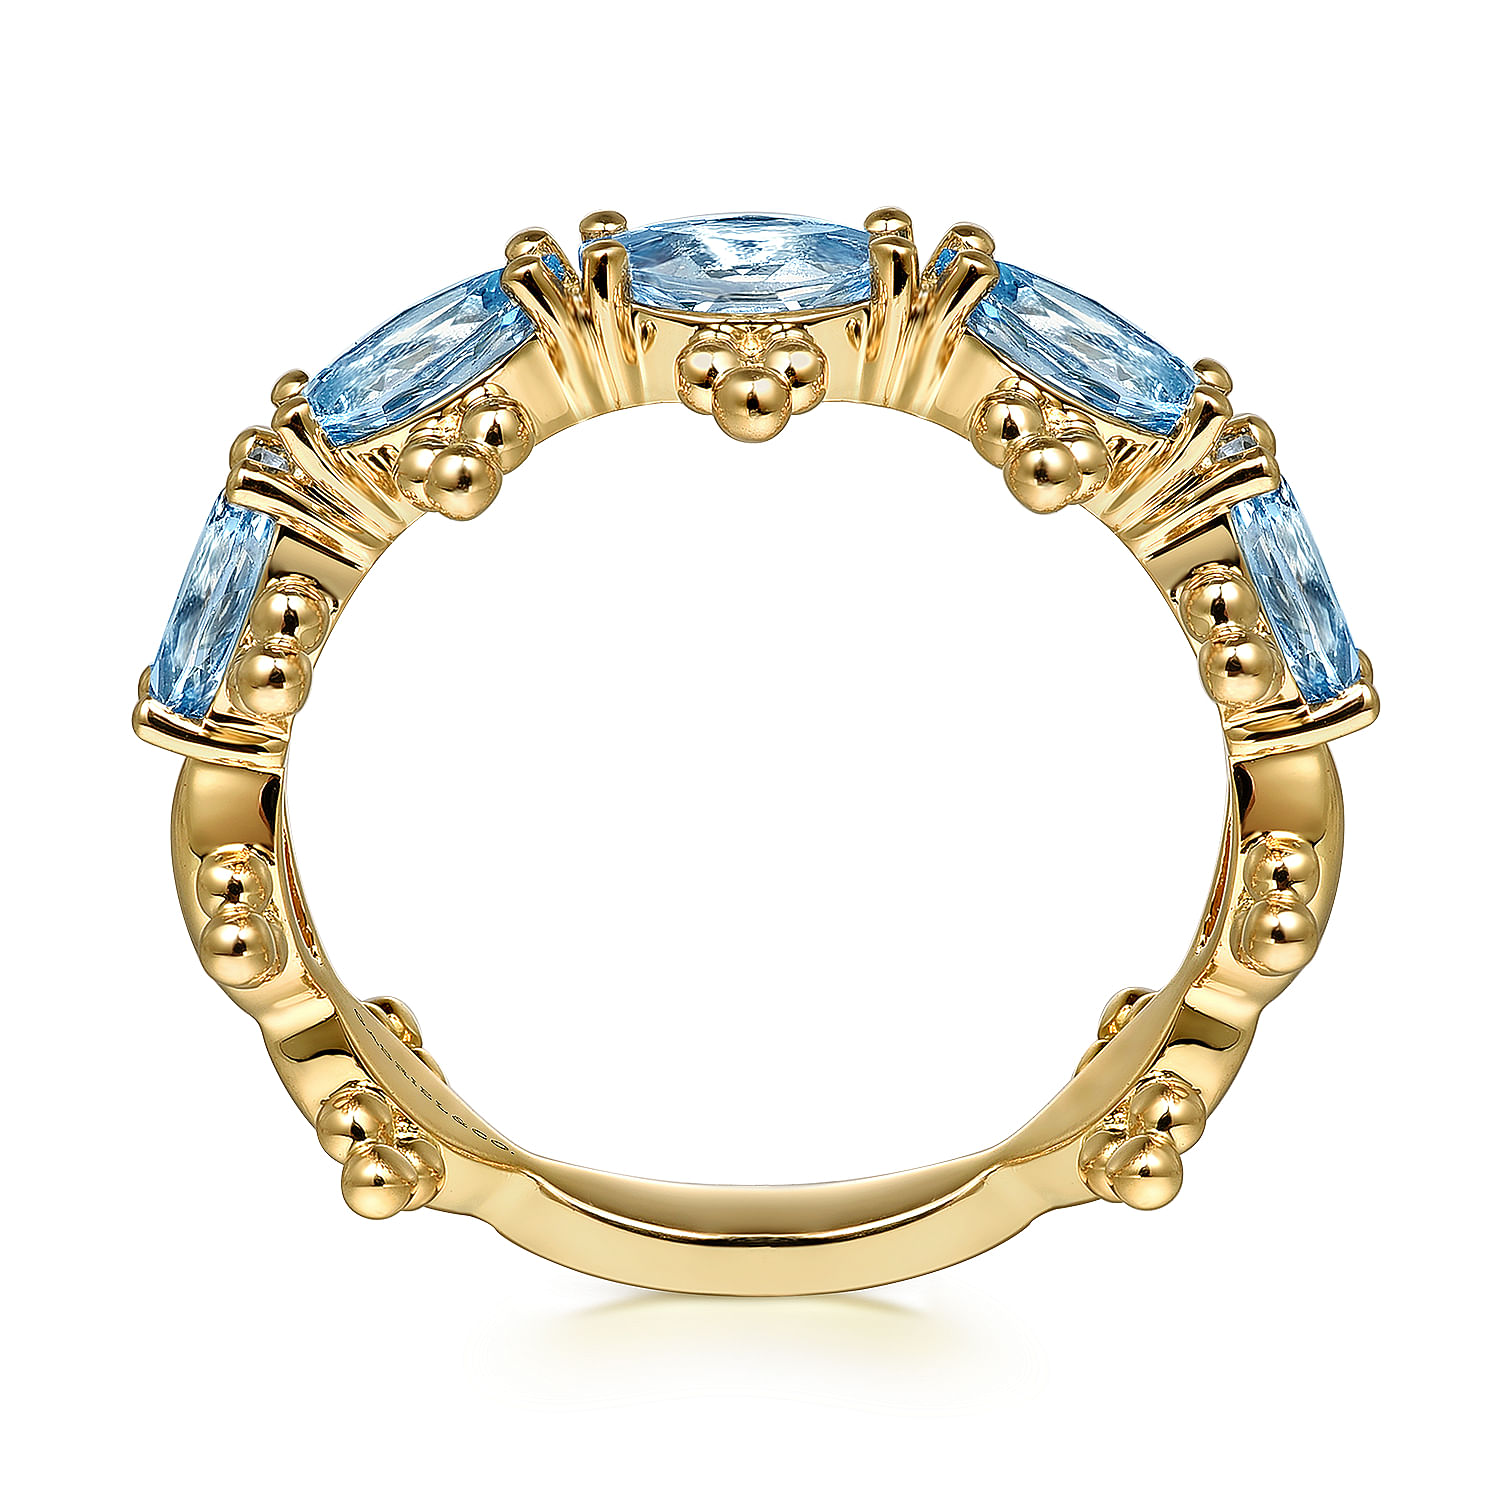 14K Yellow Gold Bujukan Blue Topaz Fashion Ring